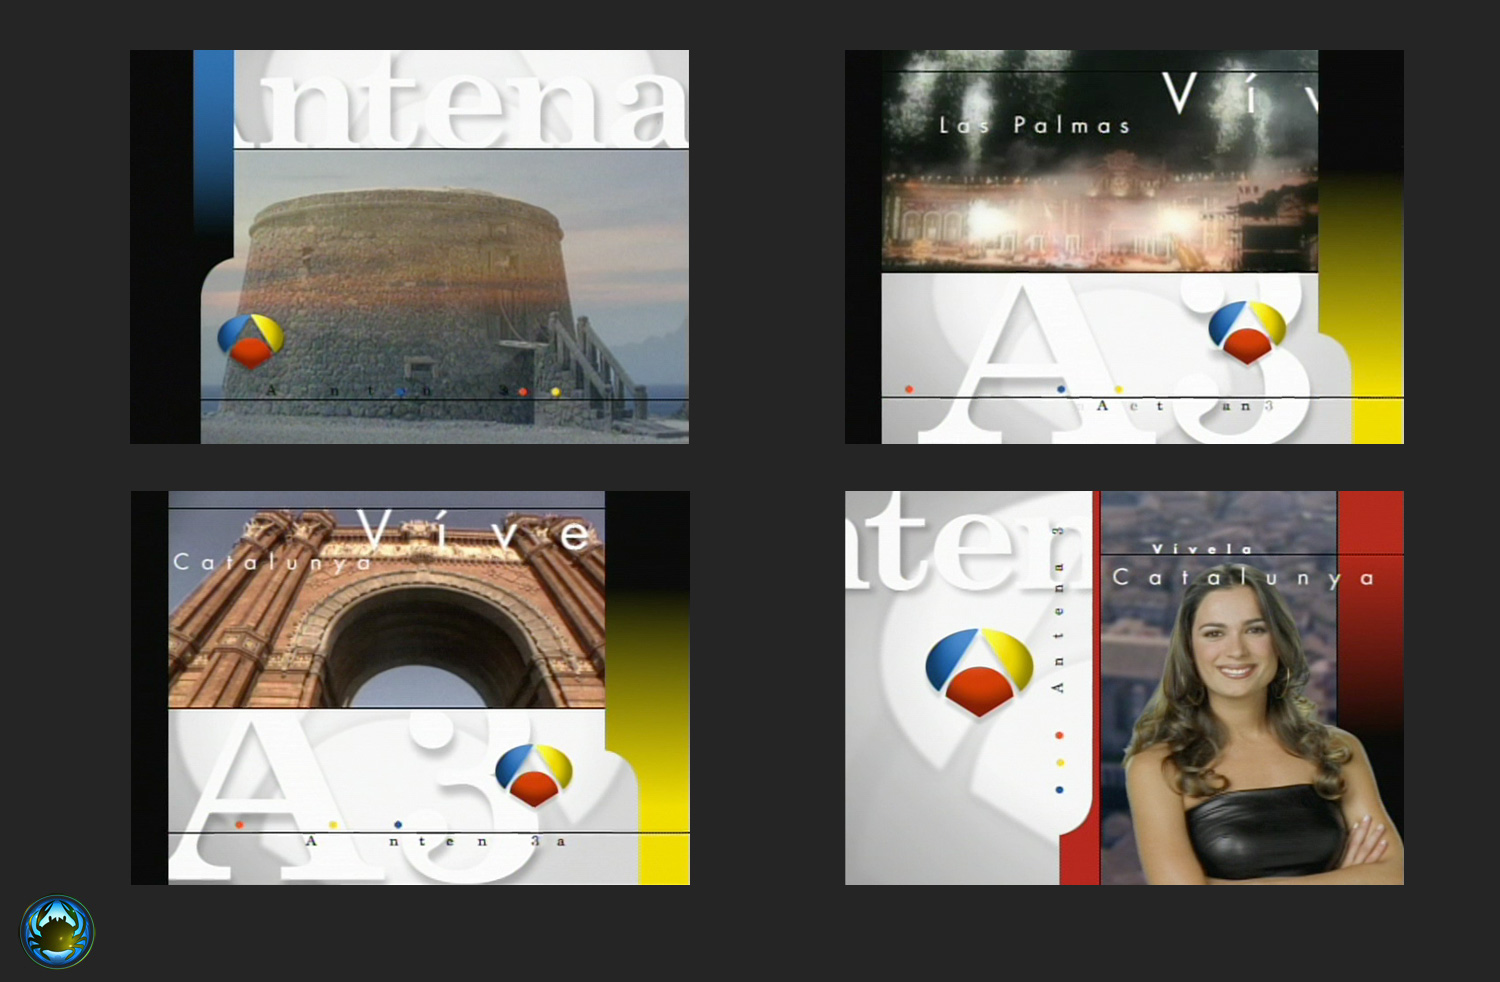 Antena 3 (Spain TV Network)